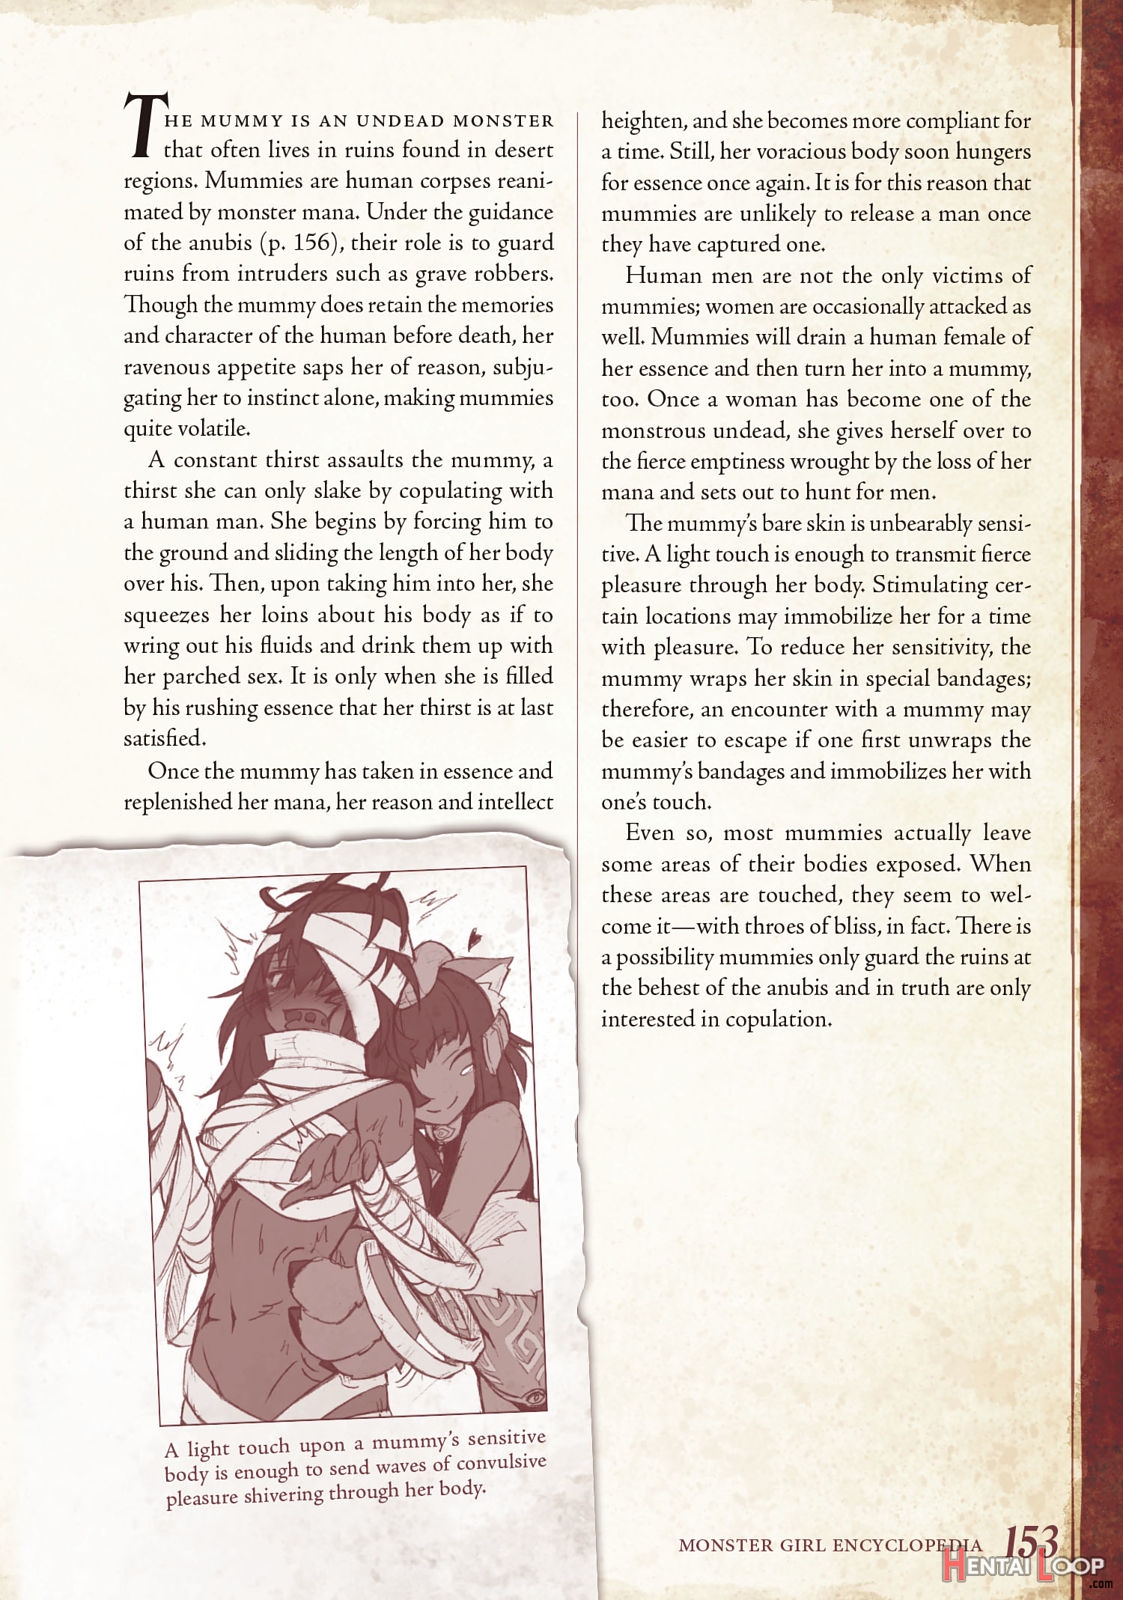 Monster Girl Encyclopedia Vol. 1 page 154